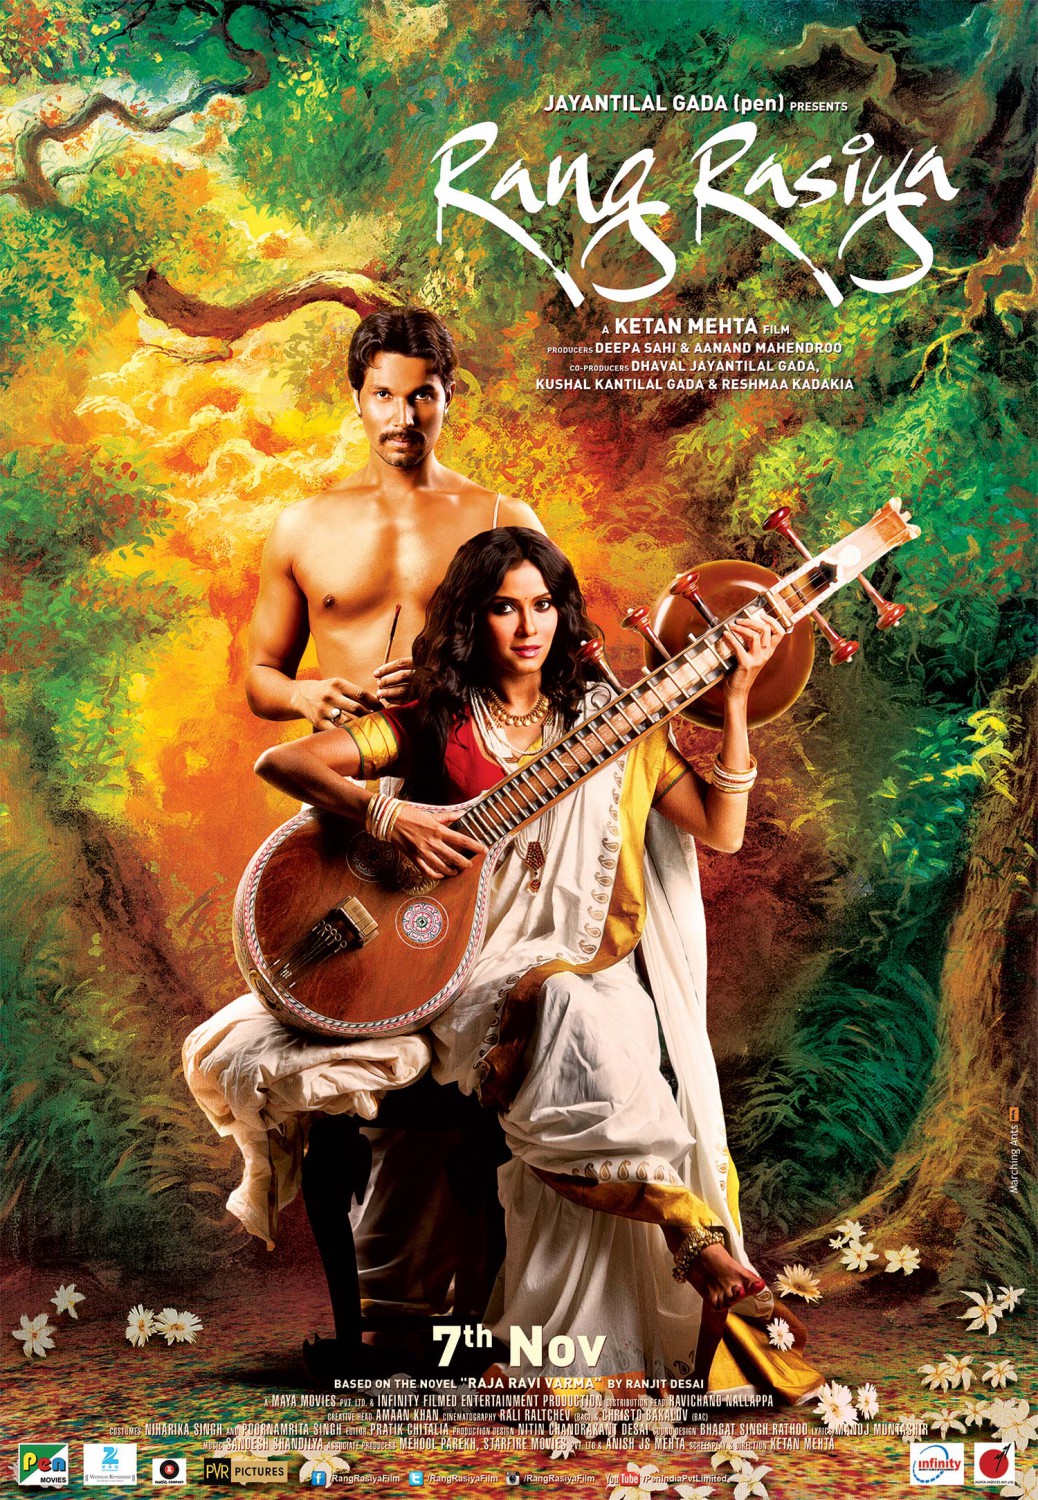 Extra Large Movie Poster Image for Rang rasiya (#8 of 9)